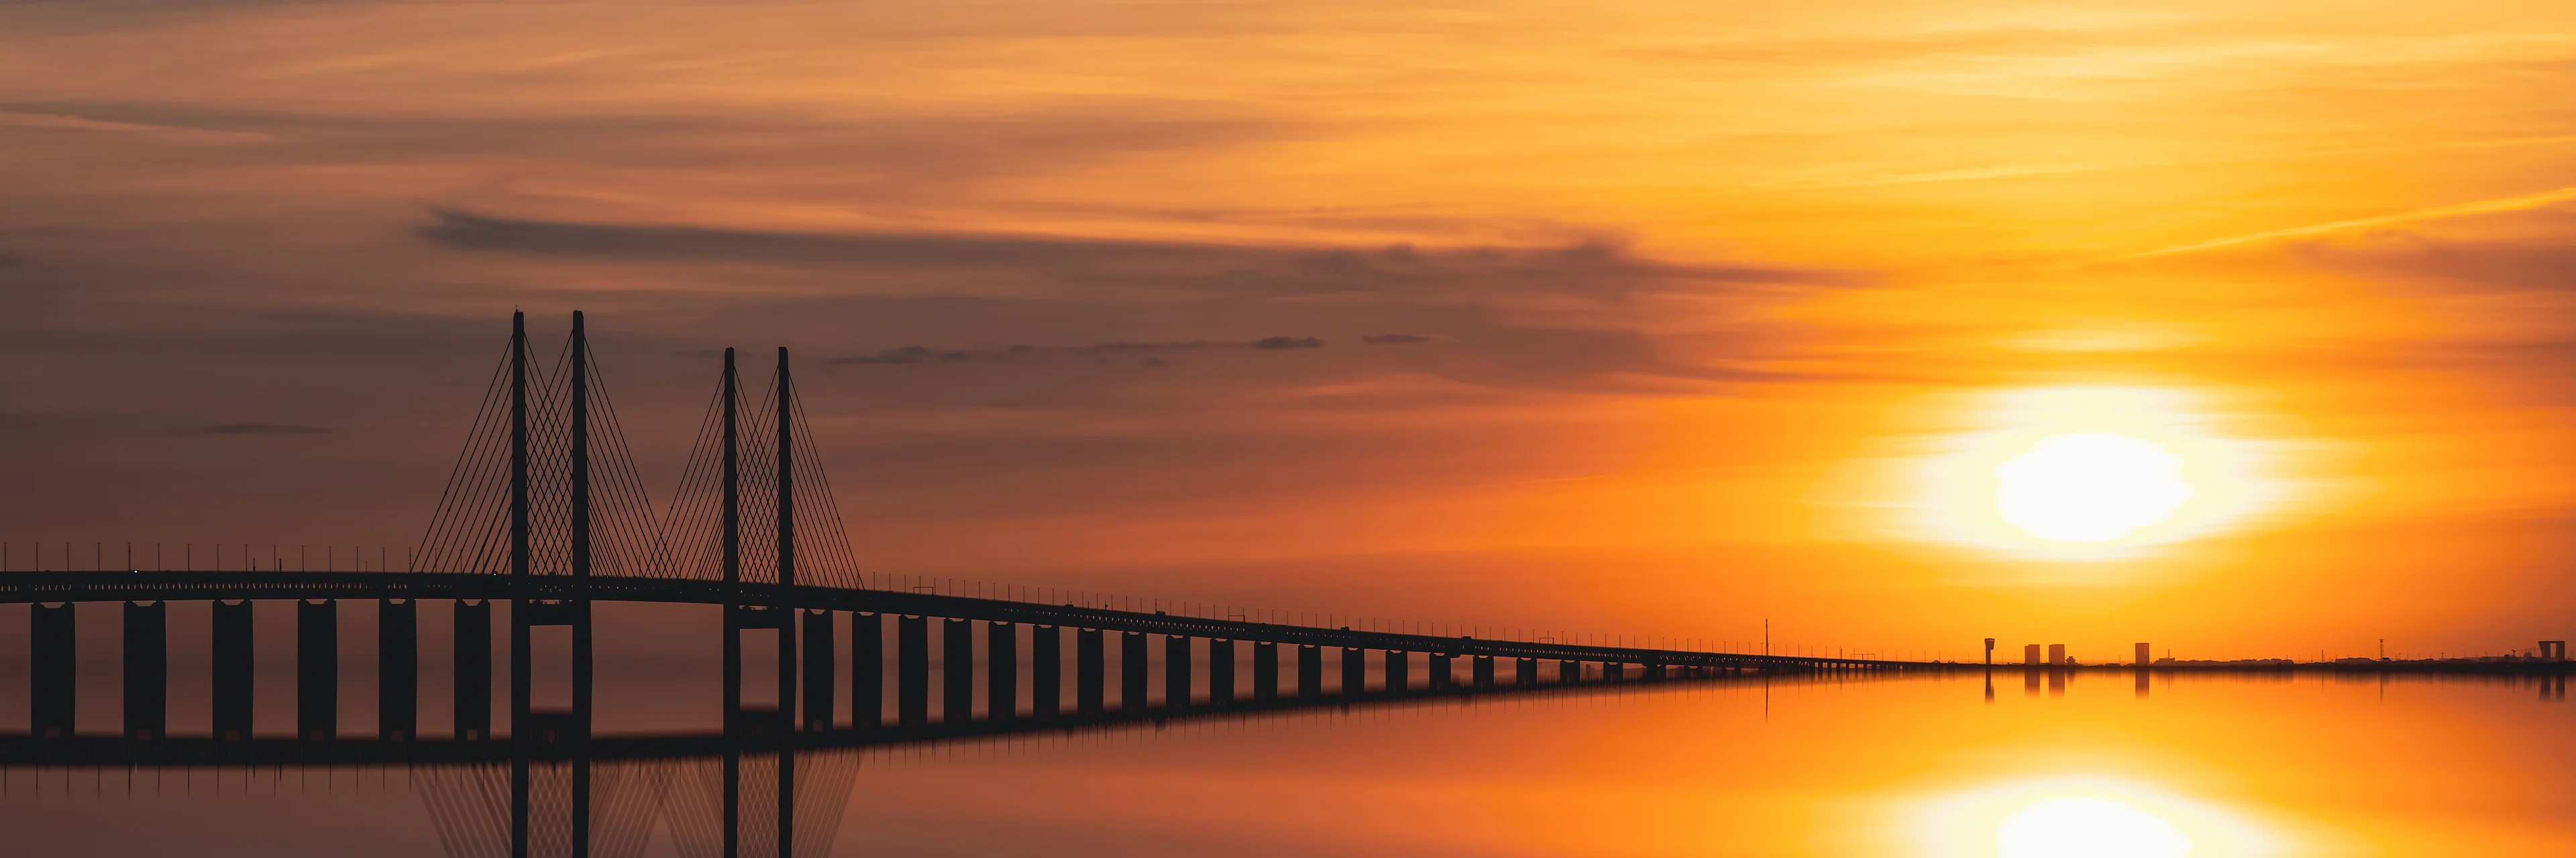 The Øresund bridge in sunset.